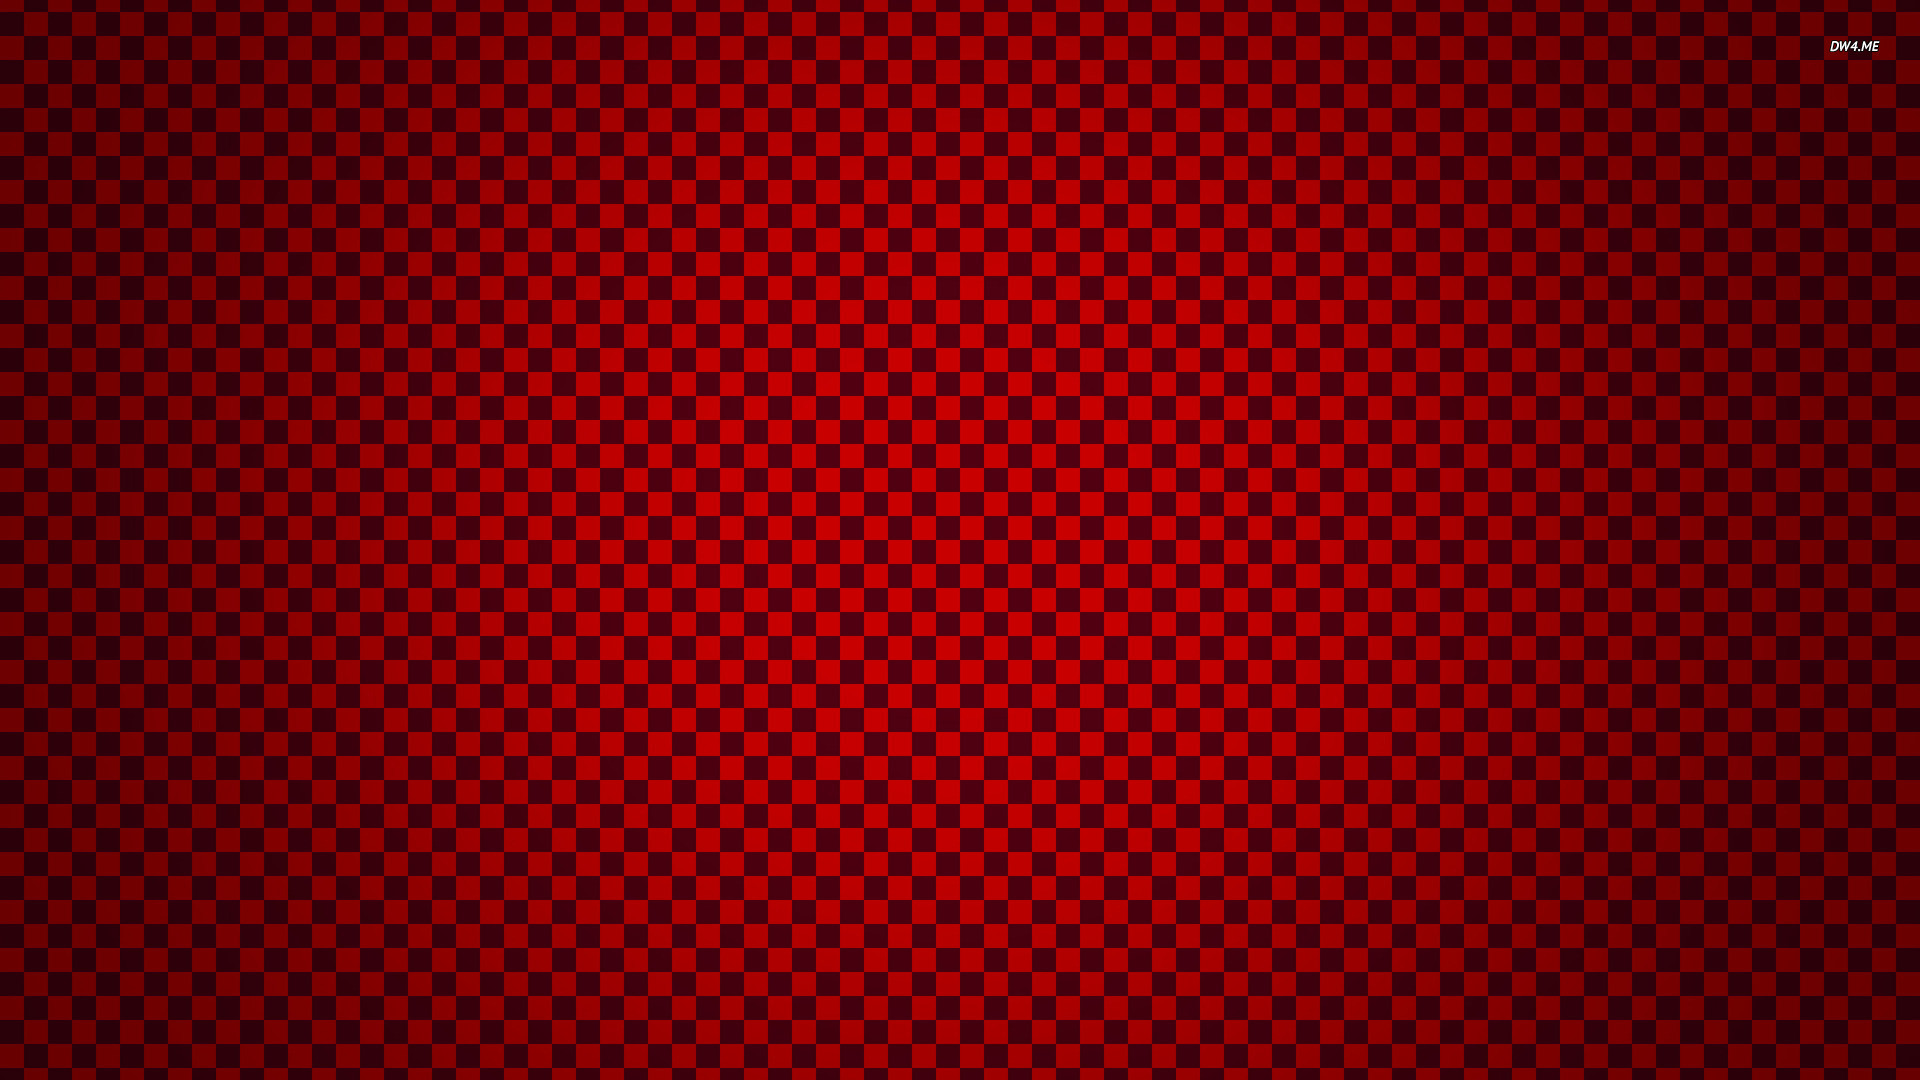 1920x1080 Red checkered pattern wallpaper - Digital Art wallpapers - #1283